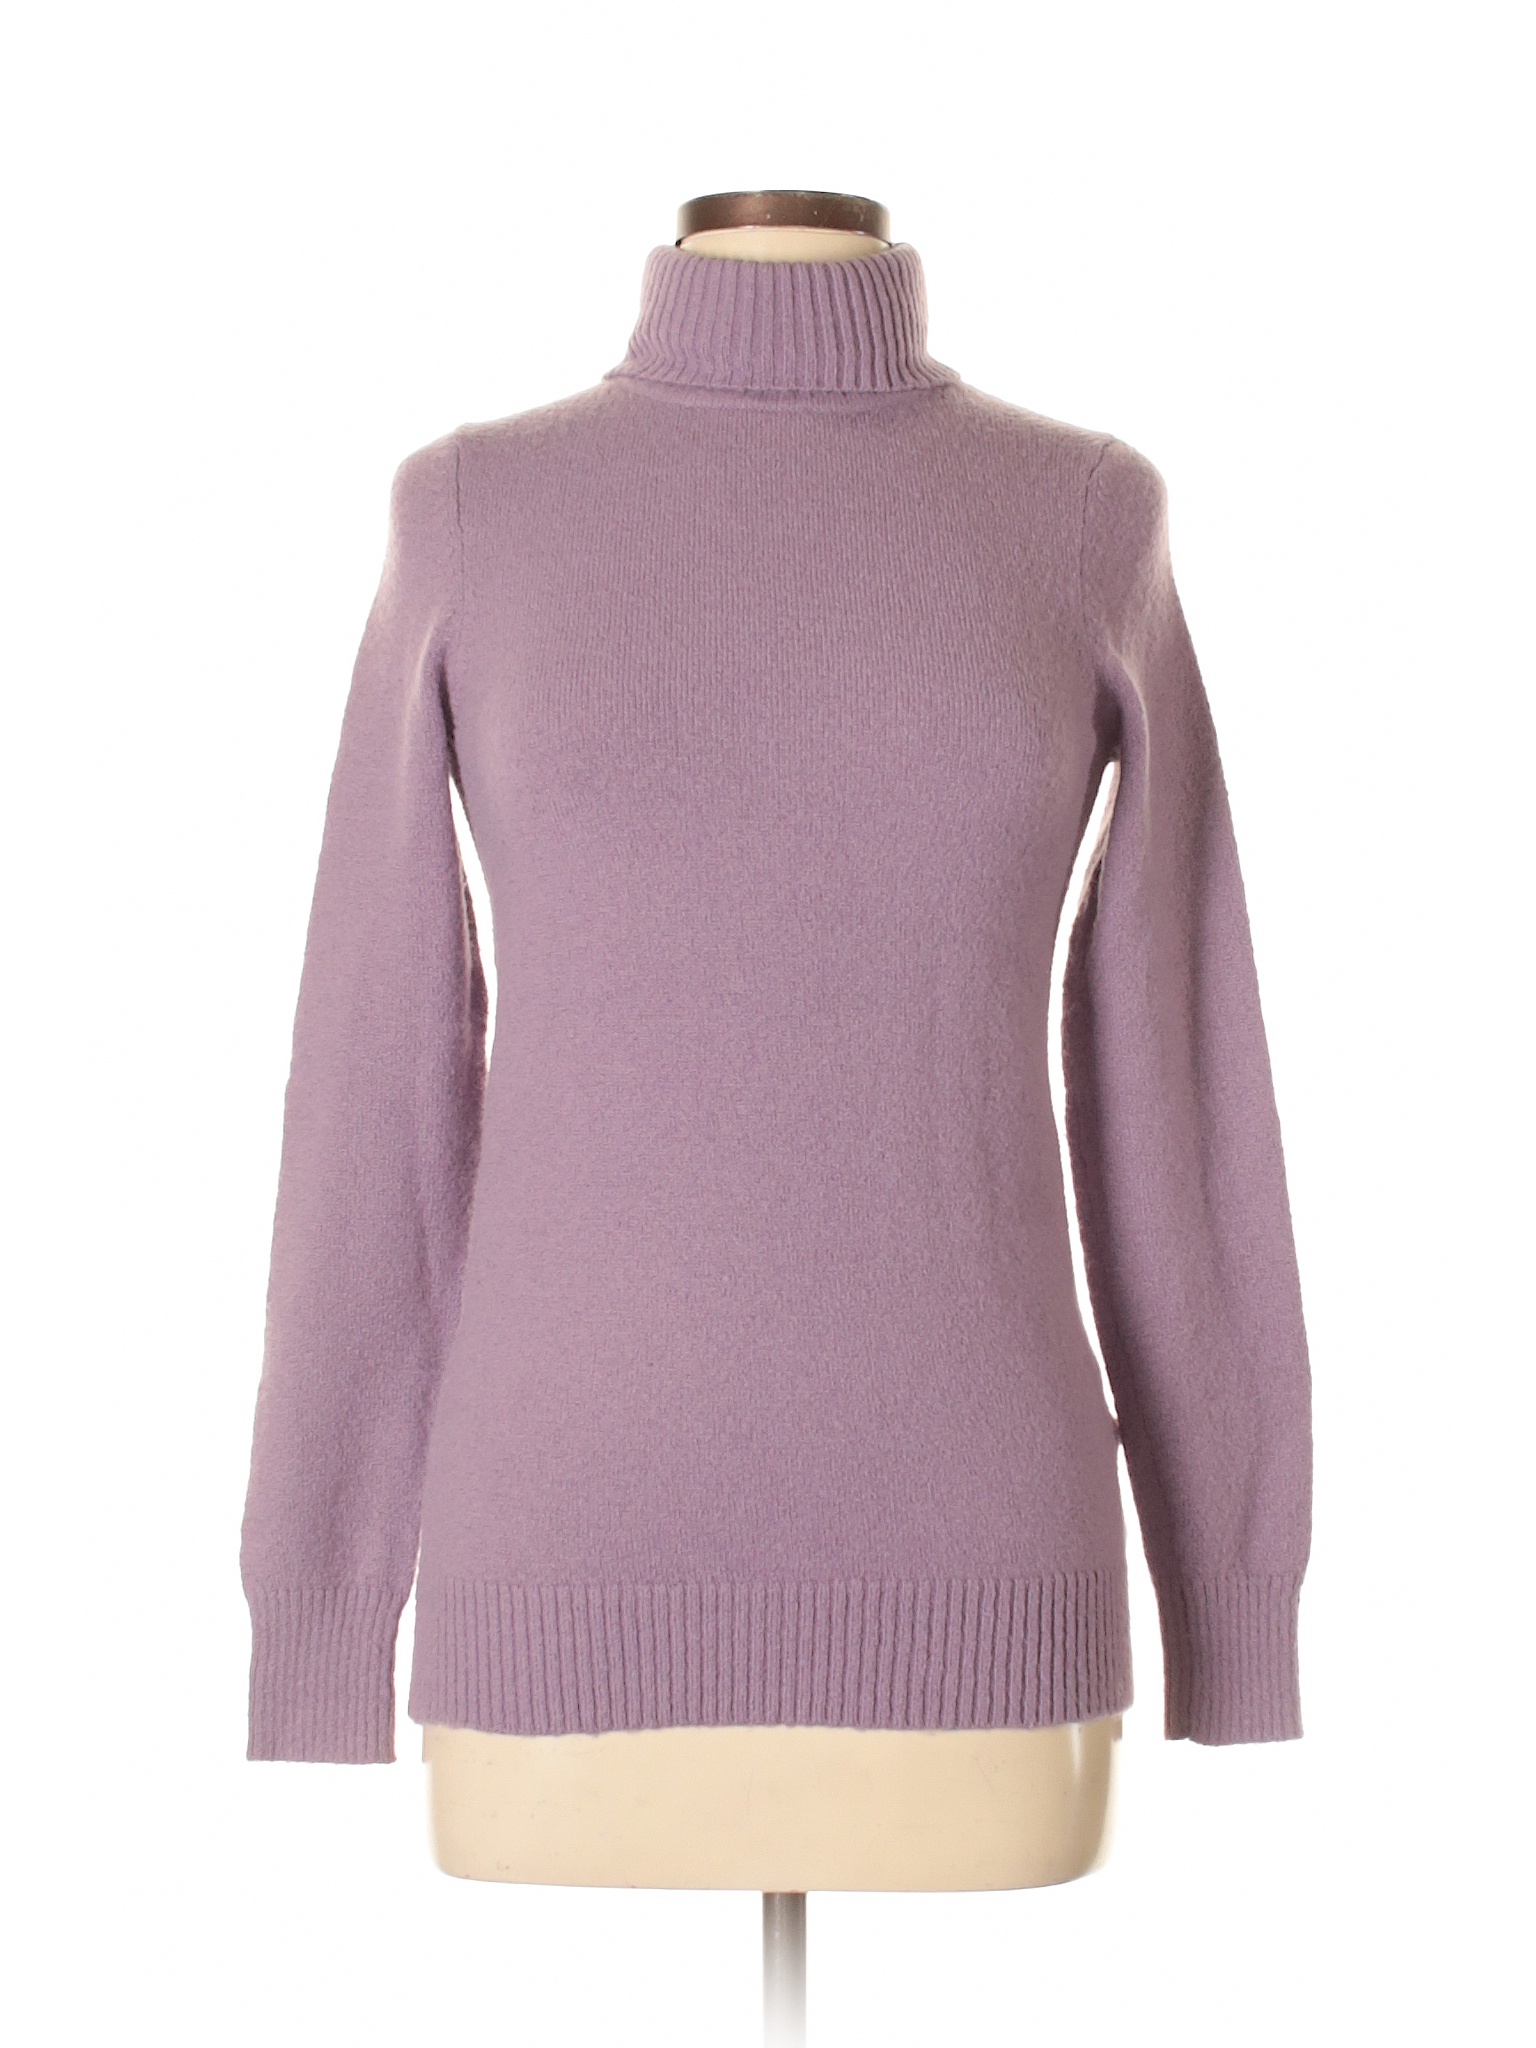 Gap Solid Light Purple Turtleneck Sweater Size M - 75% off | thredUP